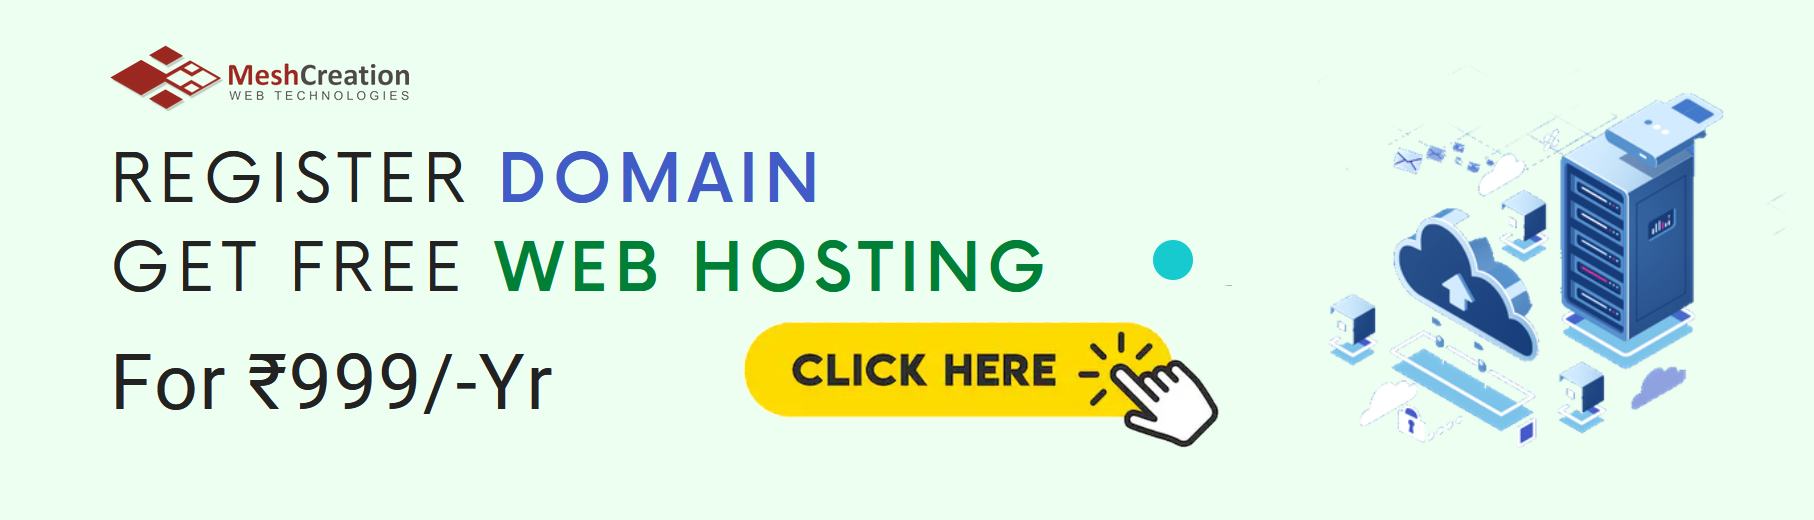 Cheap web hosting mesh creation